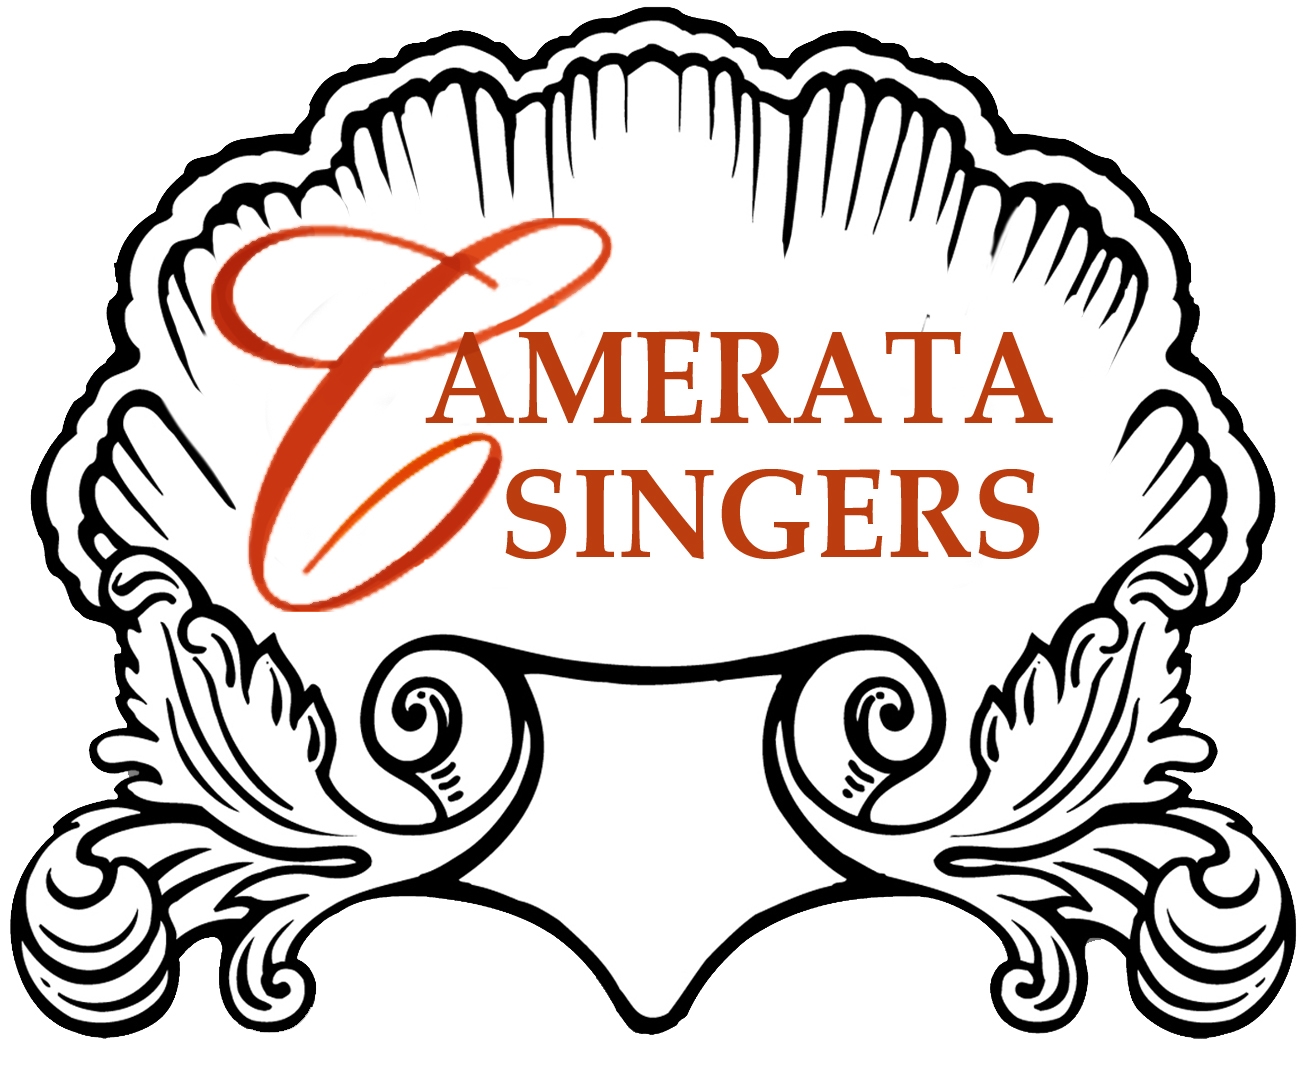 Camerata Singers of Monterey County